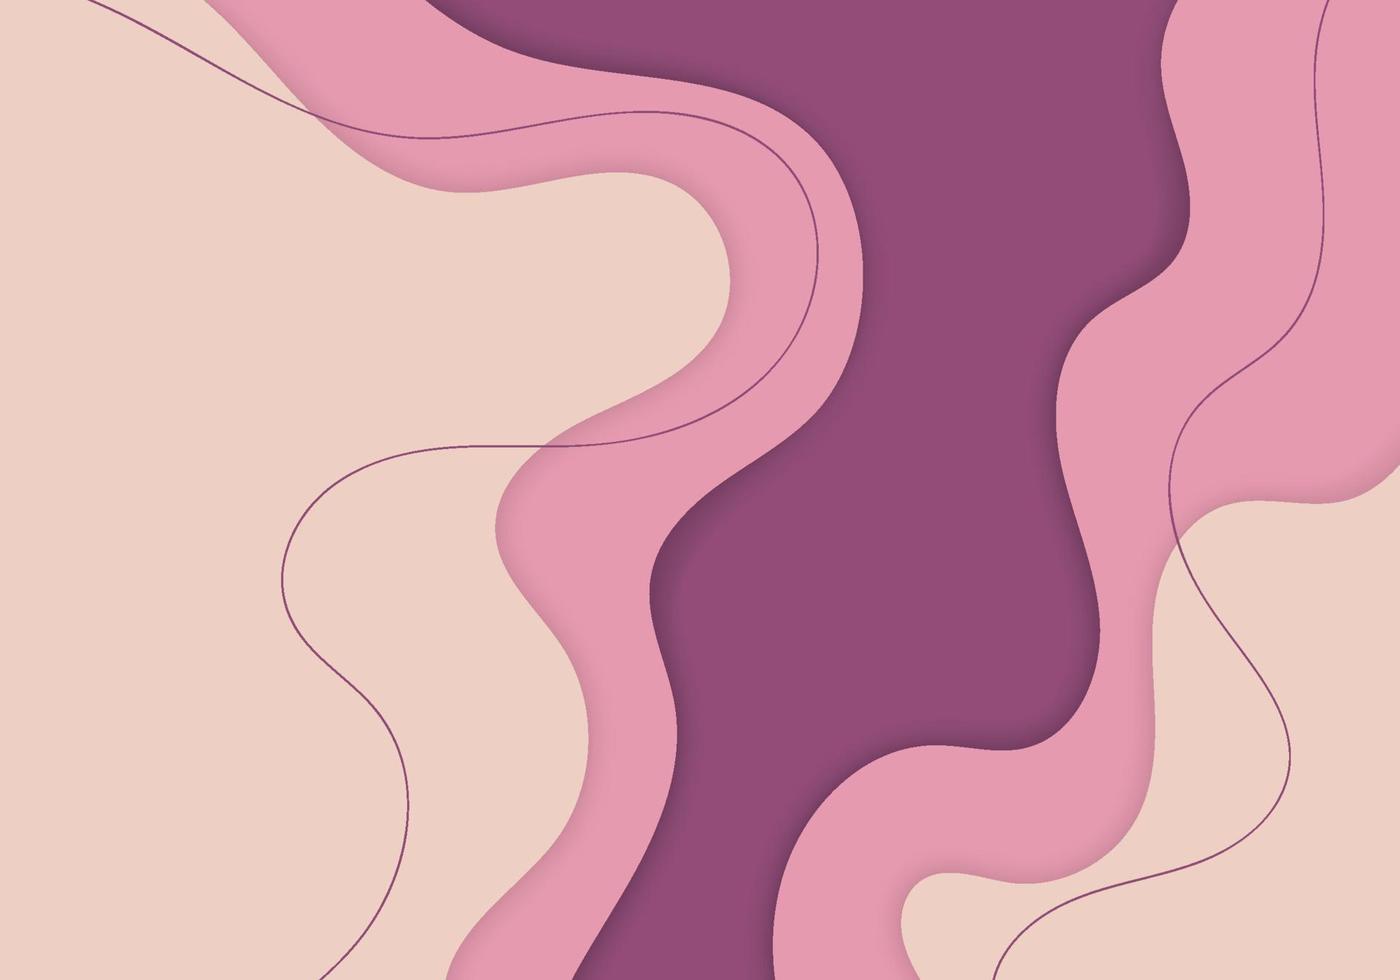  Magenta Hintergrundbild 1400x980. Abstract purple magenta wavy design artboard. Overlapping design decorative style background. Vector